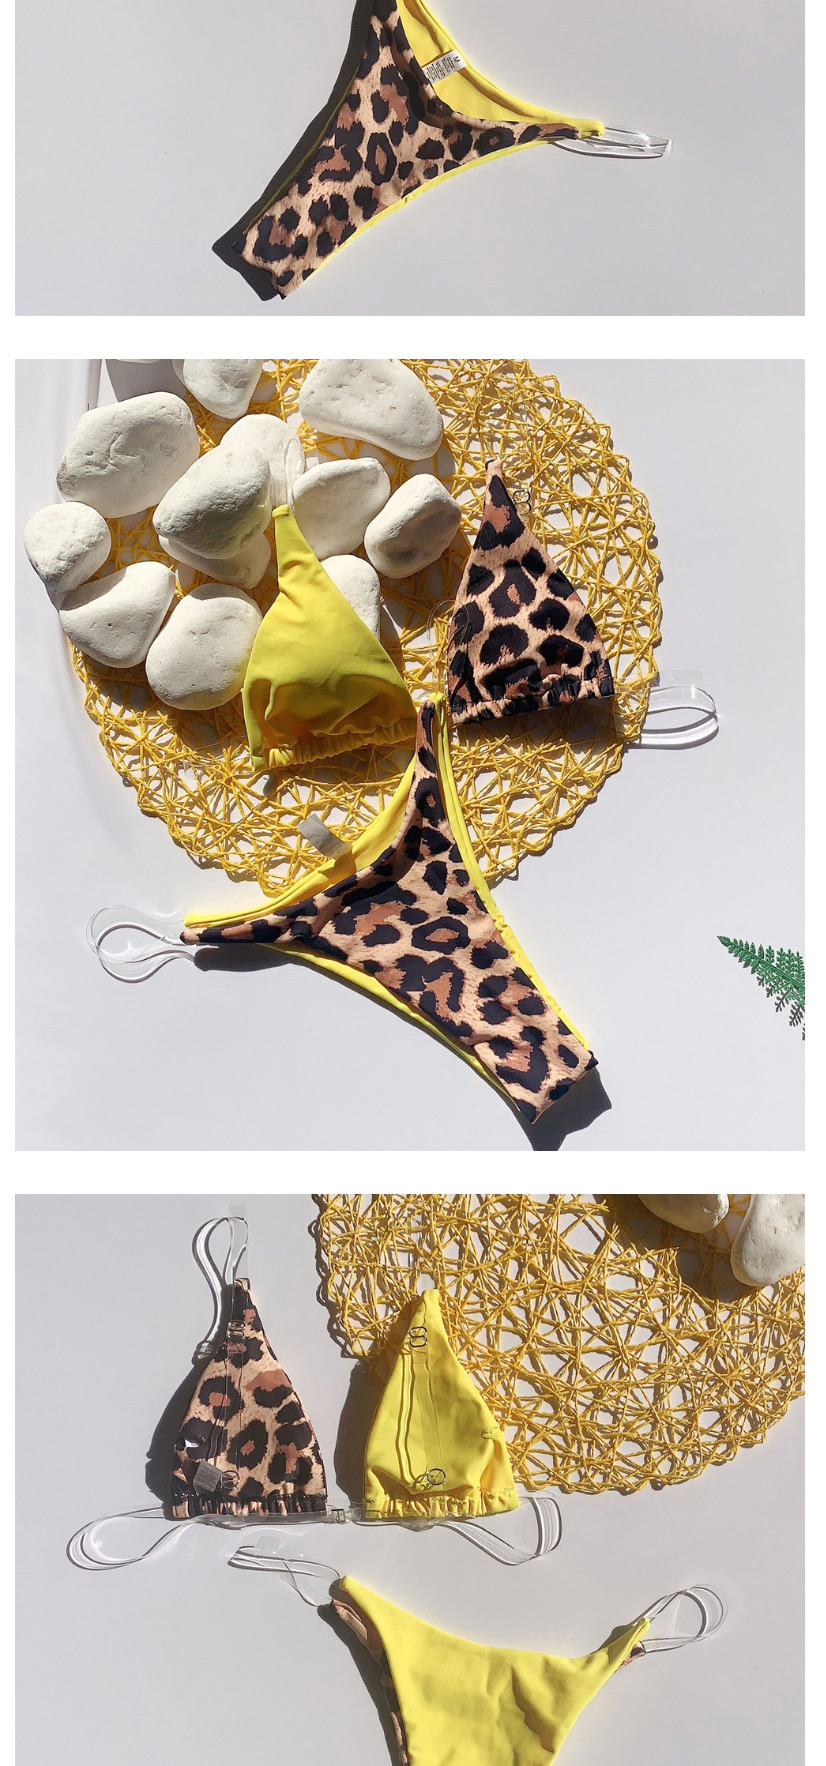 Fashion Rose Red Leopard Stitching Contrast Transparent Band Split Swimsuit,Bikini Sets